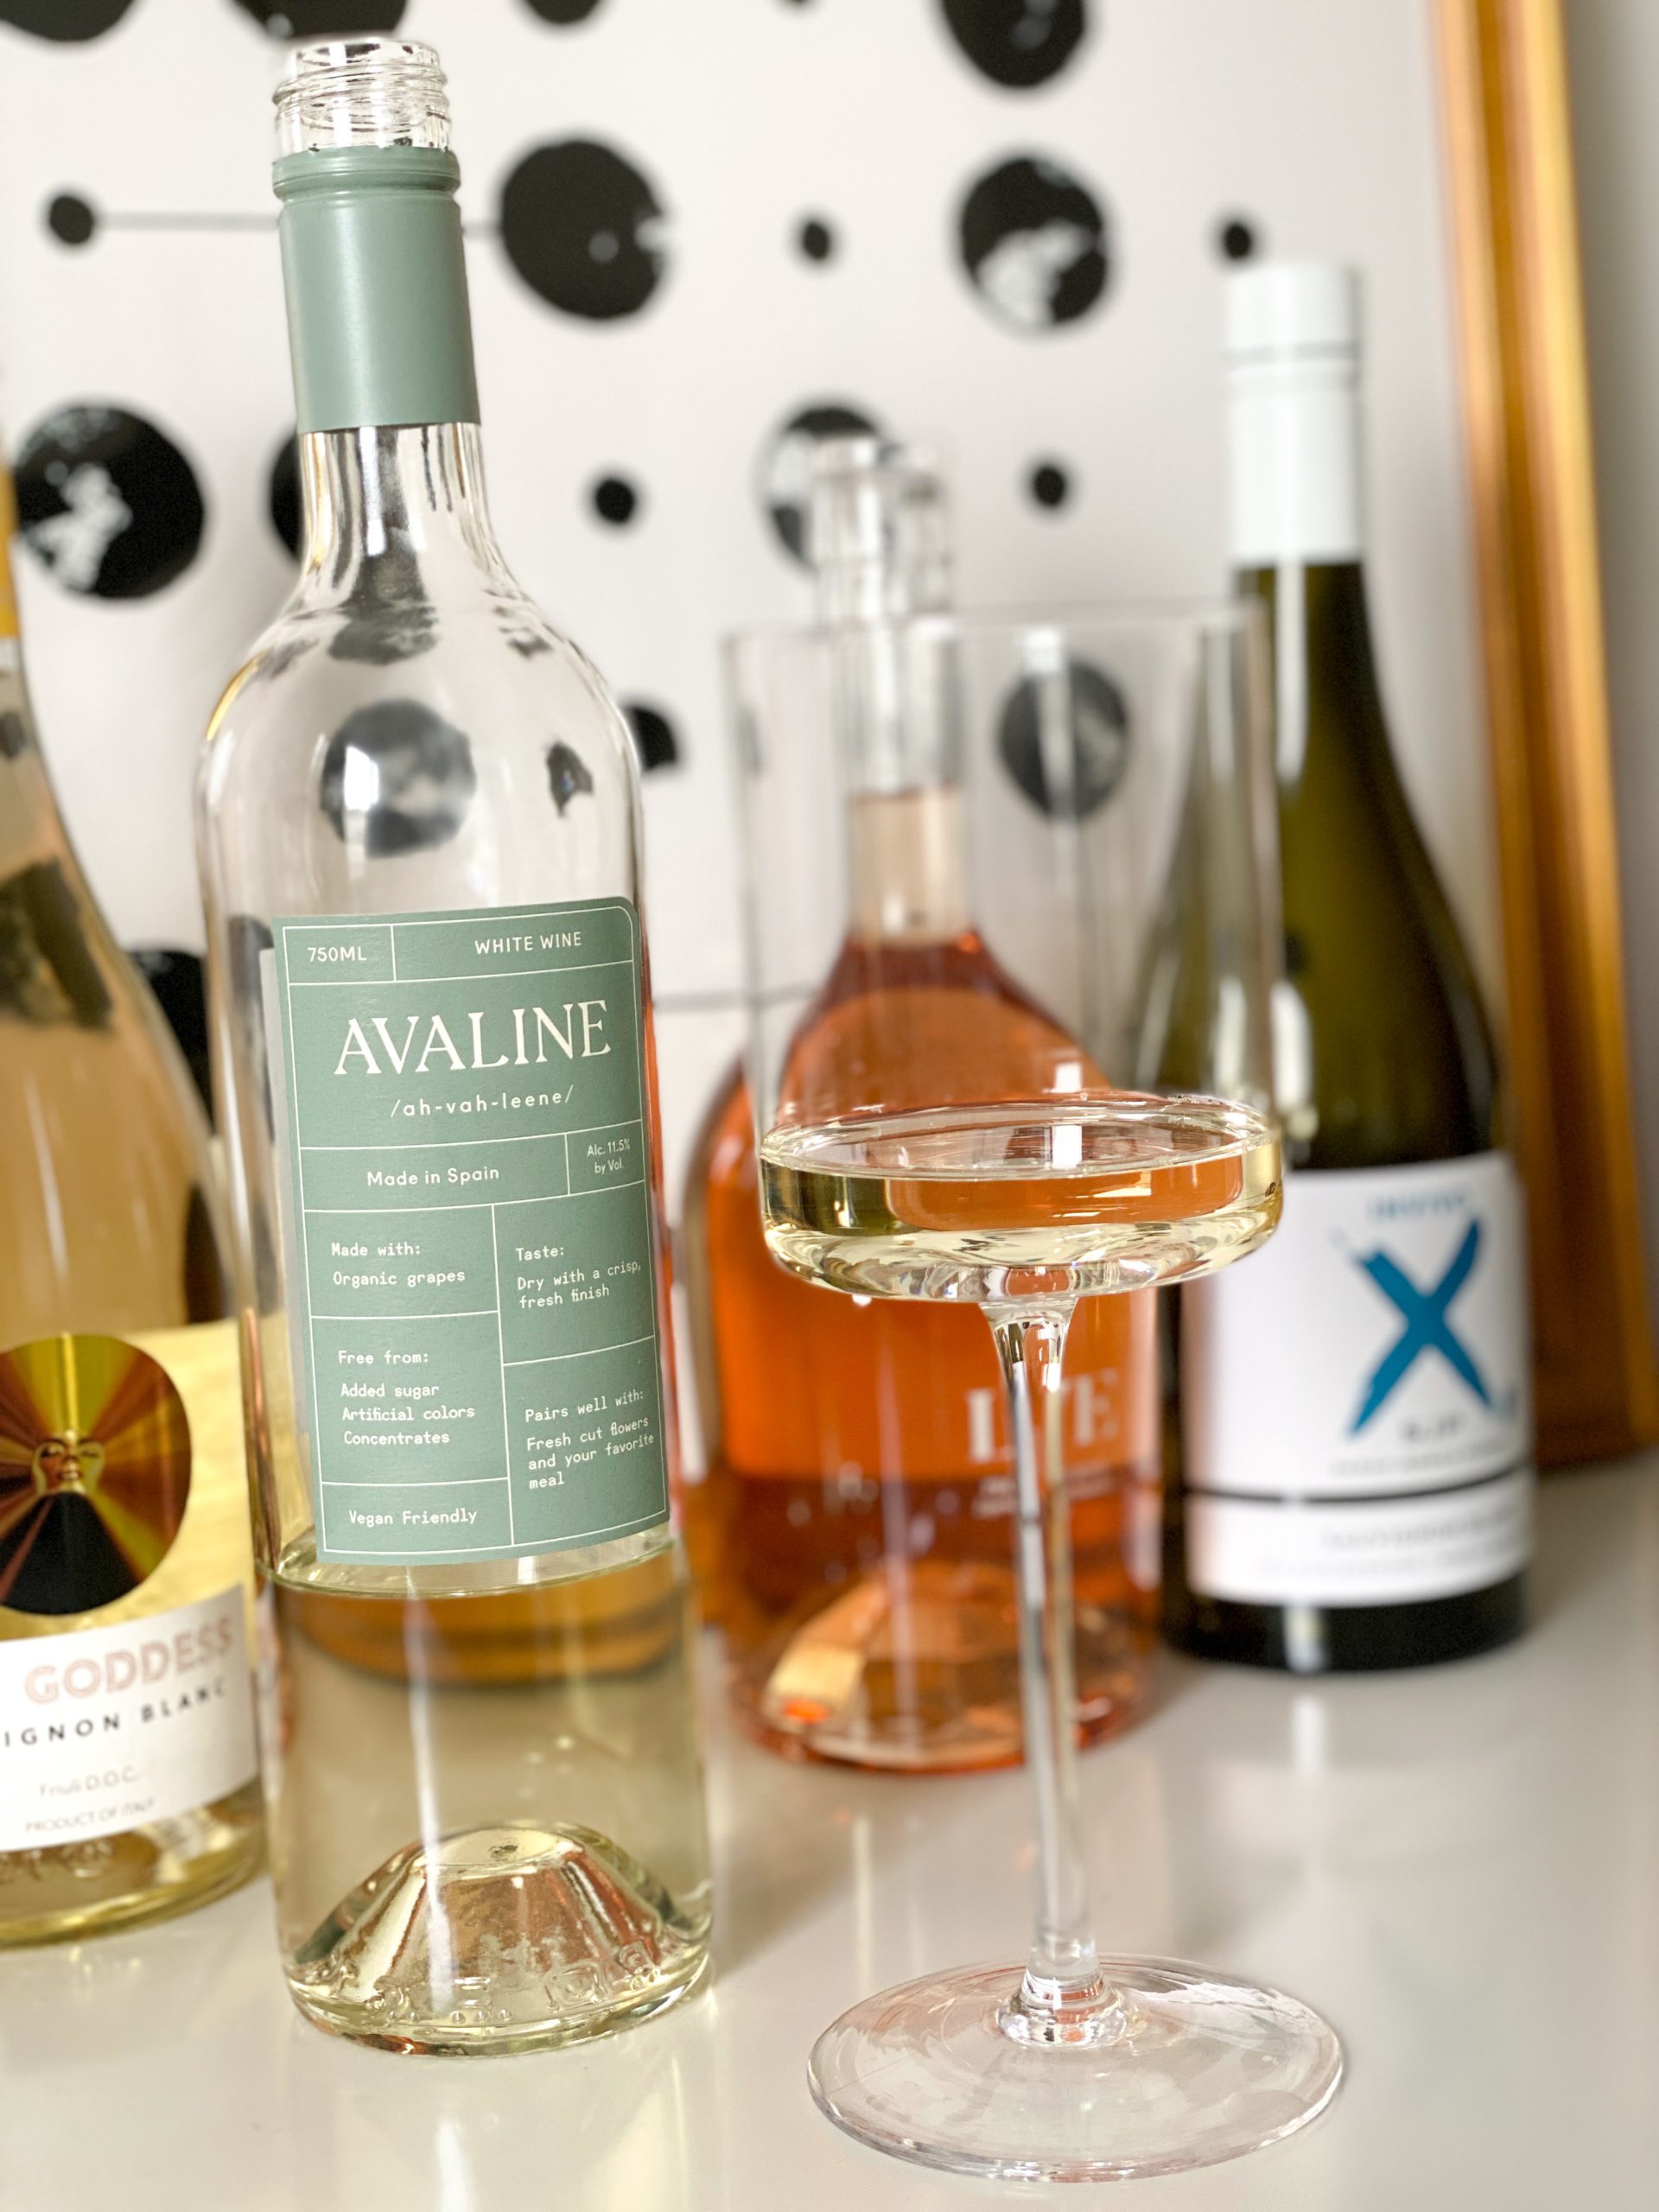 AVALINE White Wine | Rating 5 Celebrity Wines